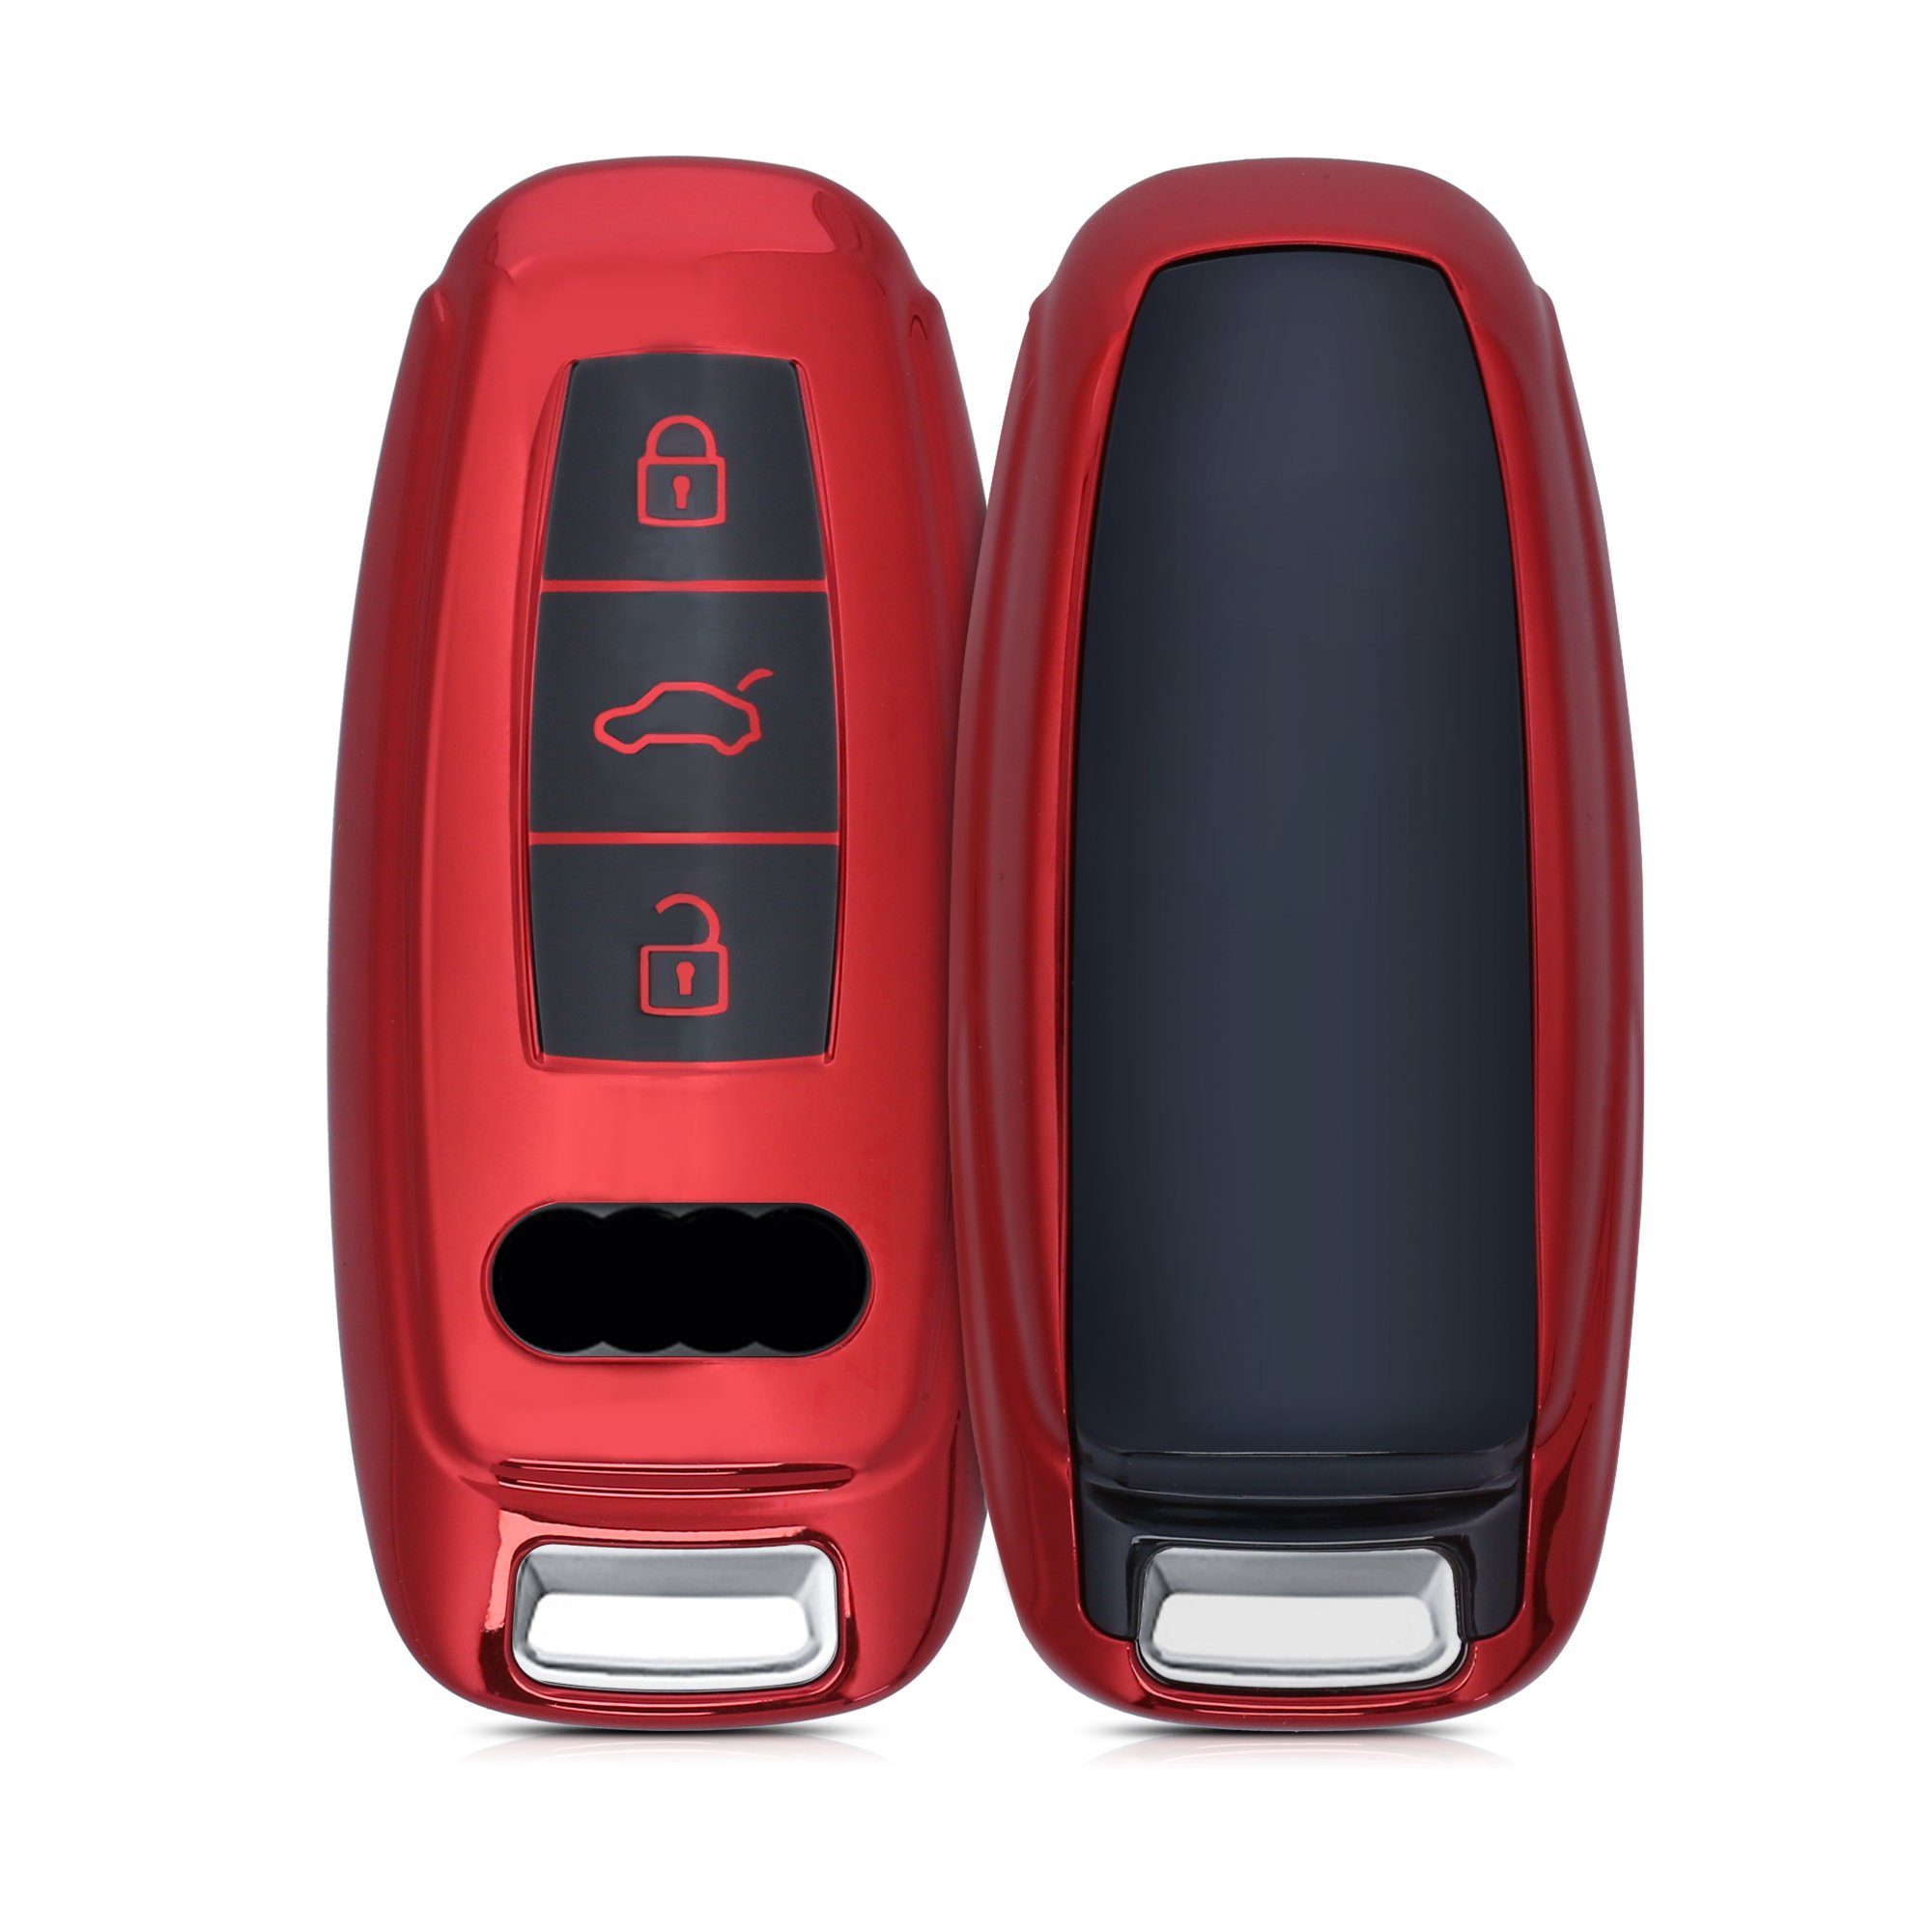 Q7 A8 A7 Hochglanz Schlüssel Schlüsseltasche kwmobile für Audi Hülle Schlüsselhülle Q8, Autoschlüssel Cover A6 Silikon Case Rot